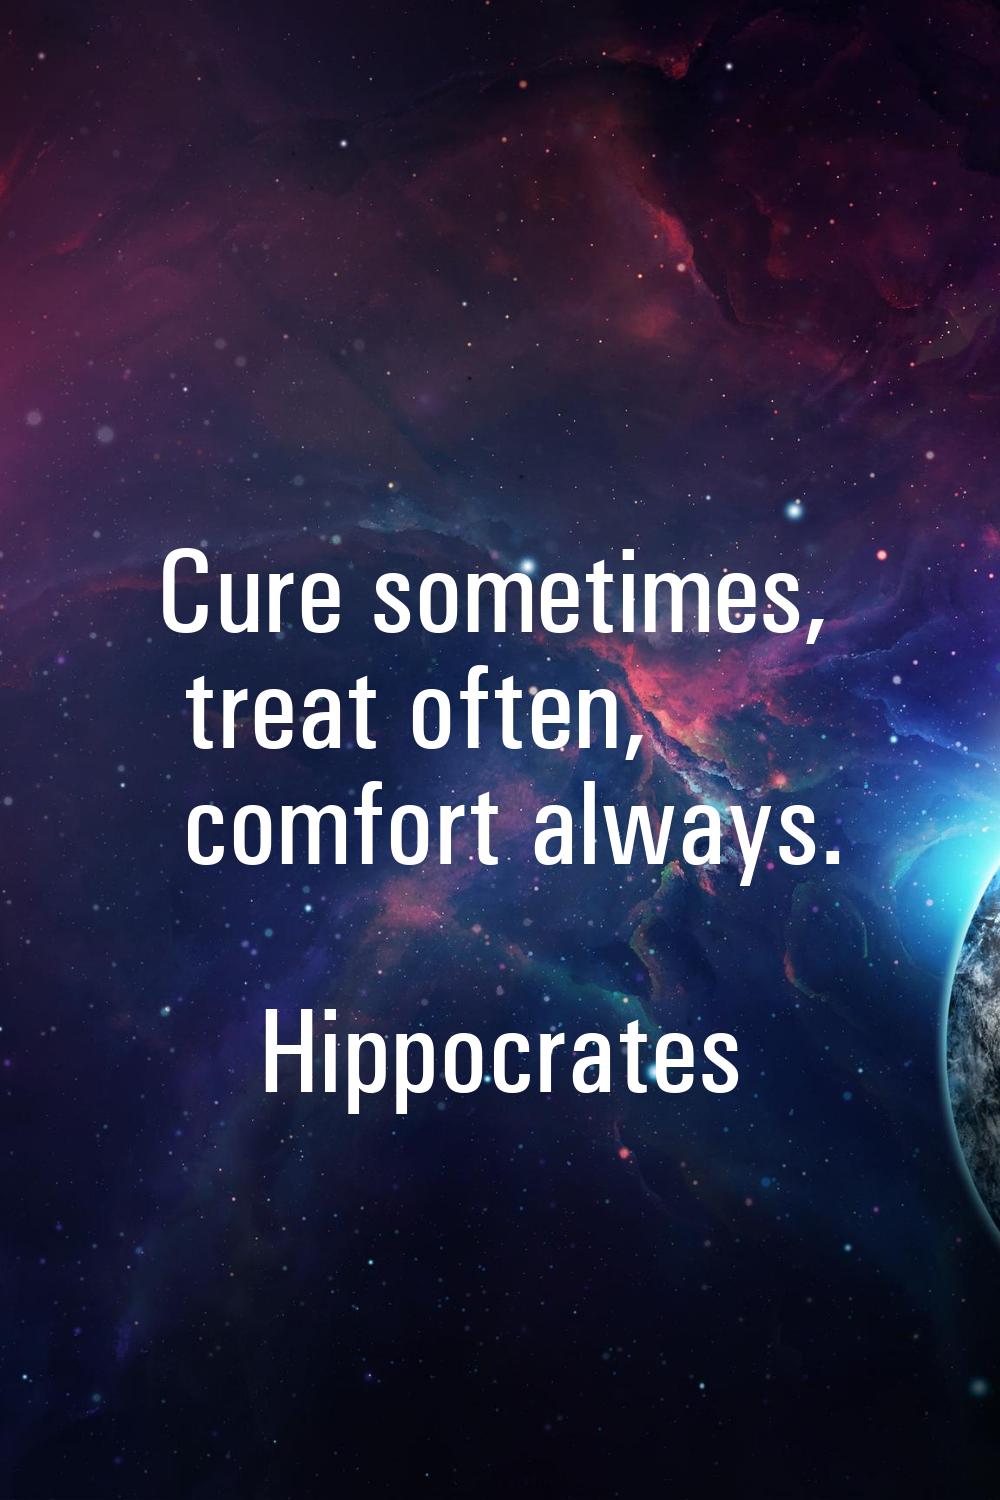 Cure sometimes, treat often, comfort always.